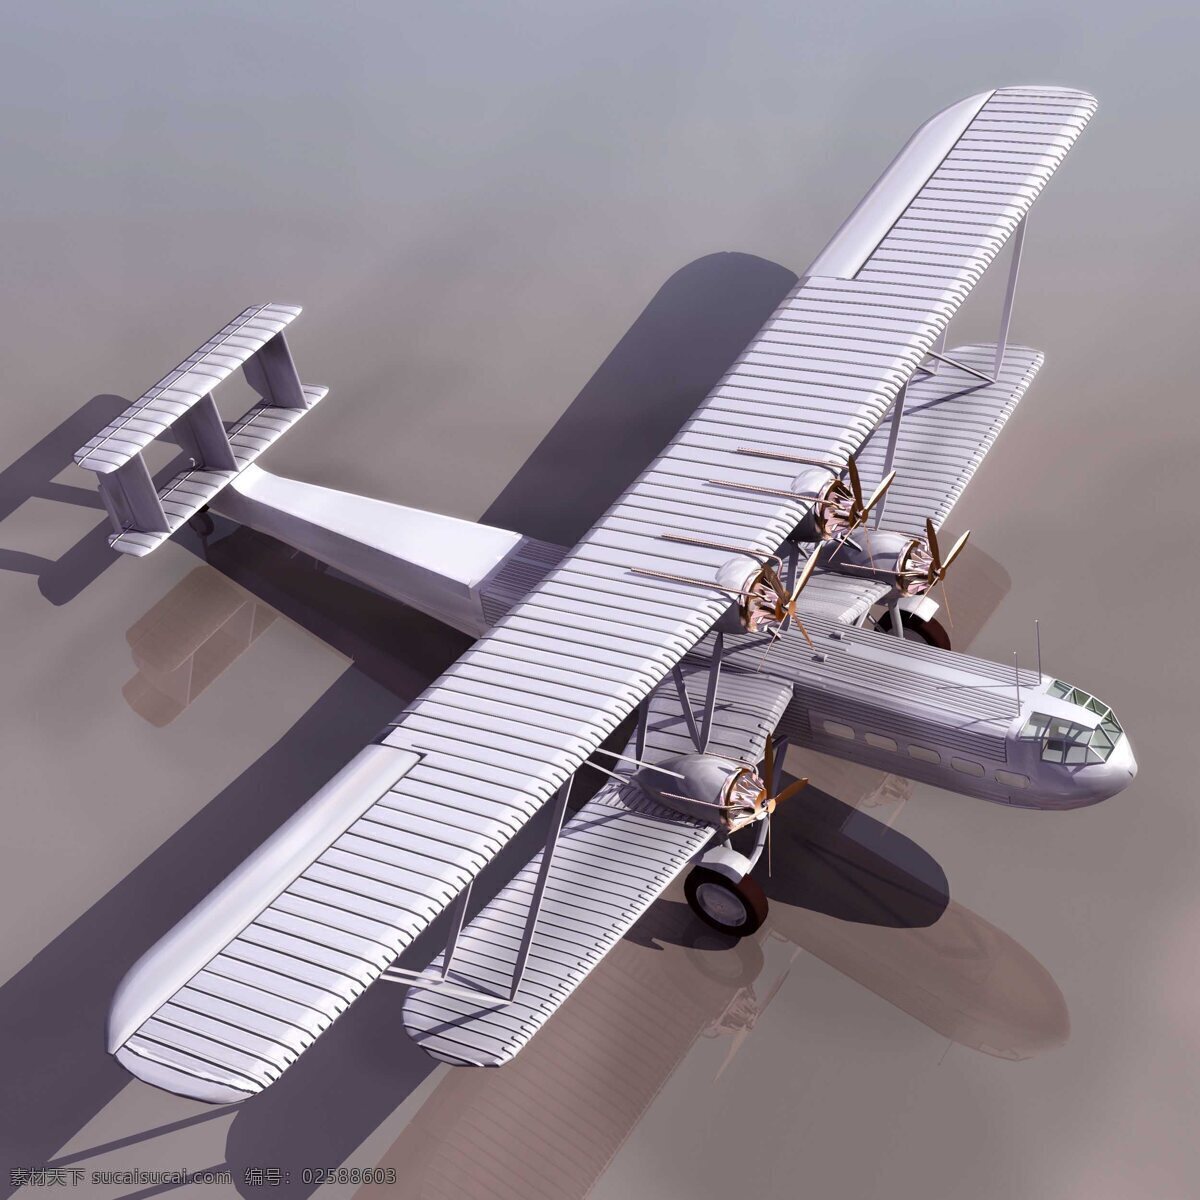 heracles 滑翔机 民用飞机 3d模型素材 电器模型